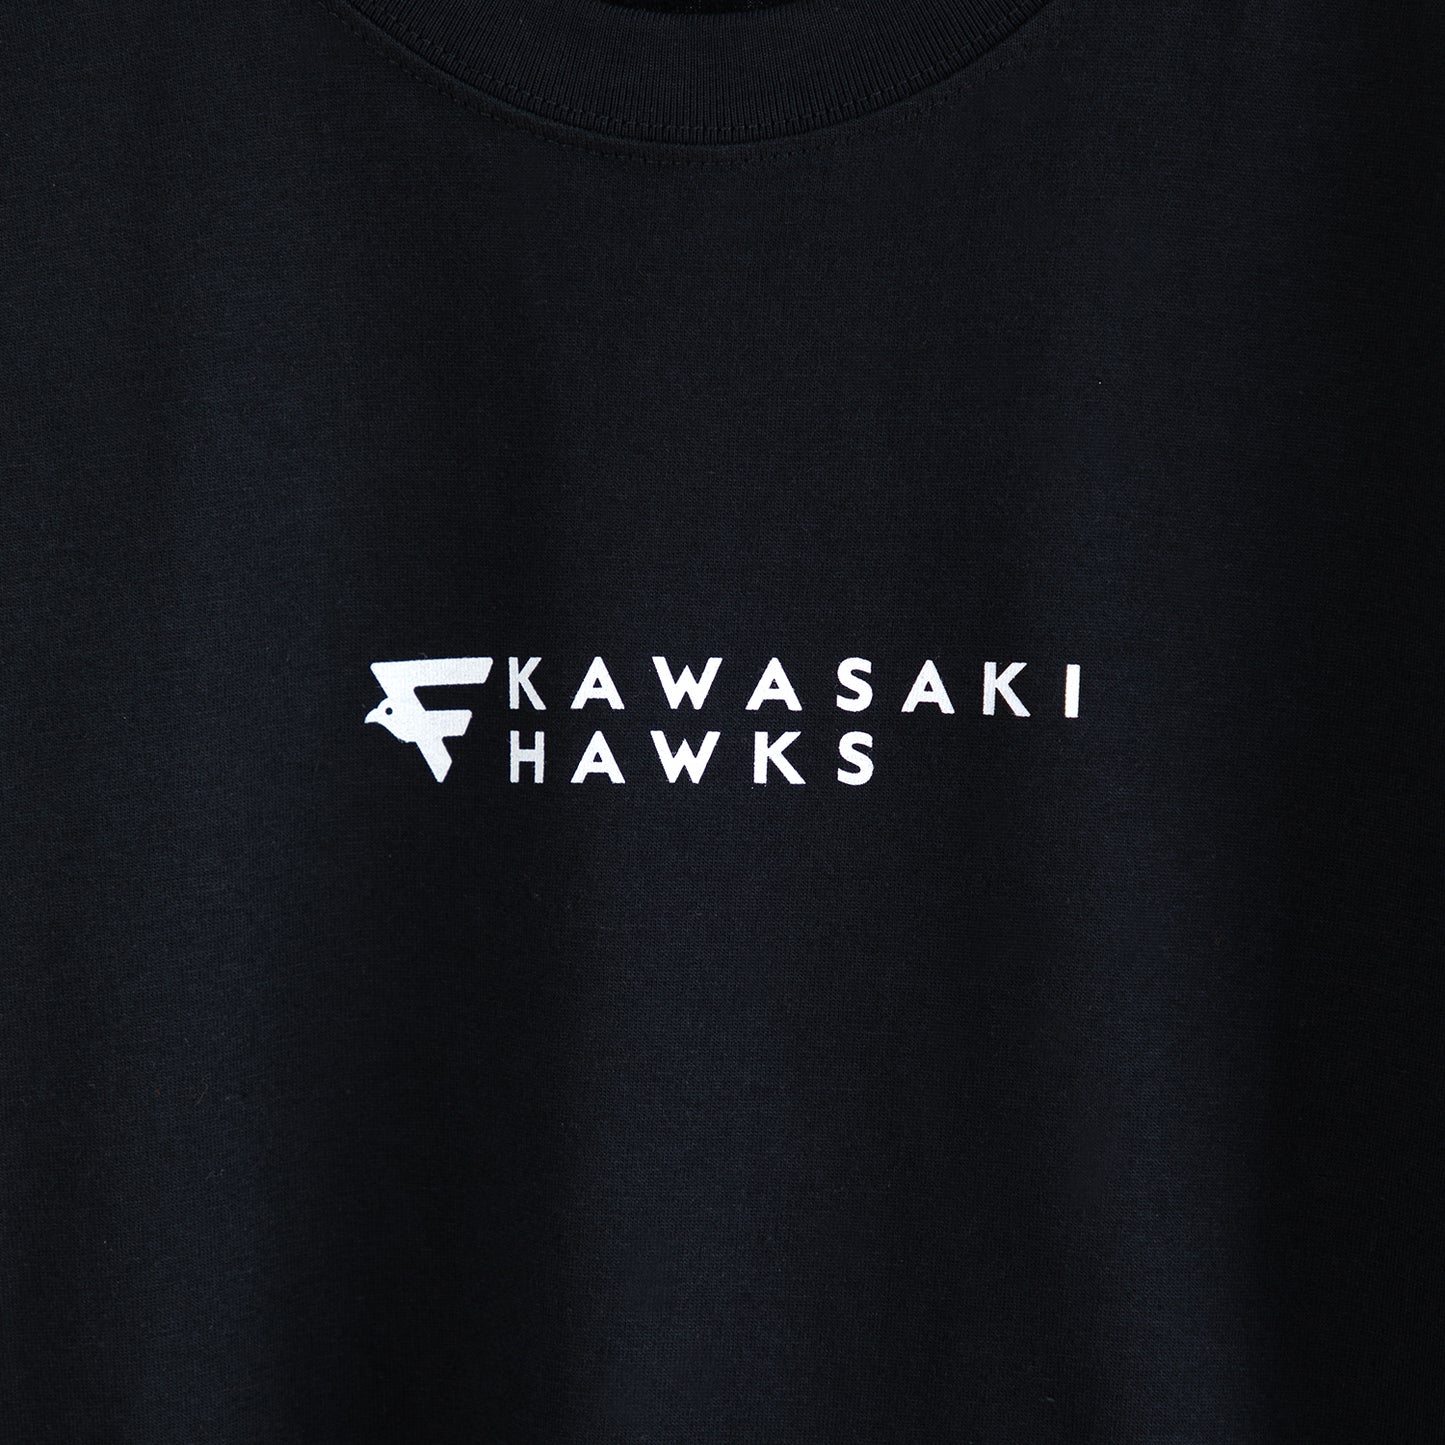 KAWASAKI HAWKS LOGO T-shirt BLACK